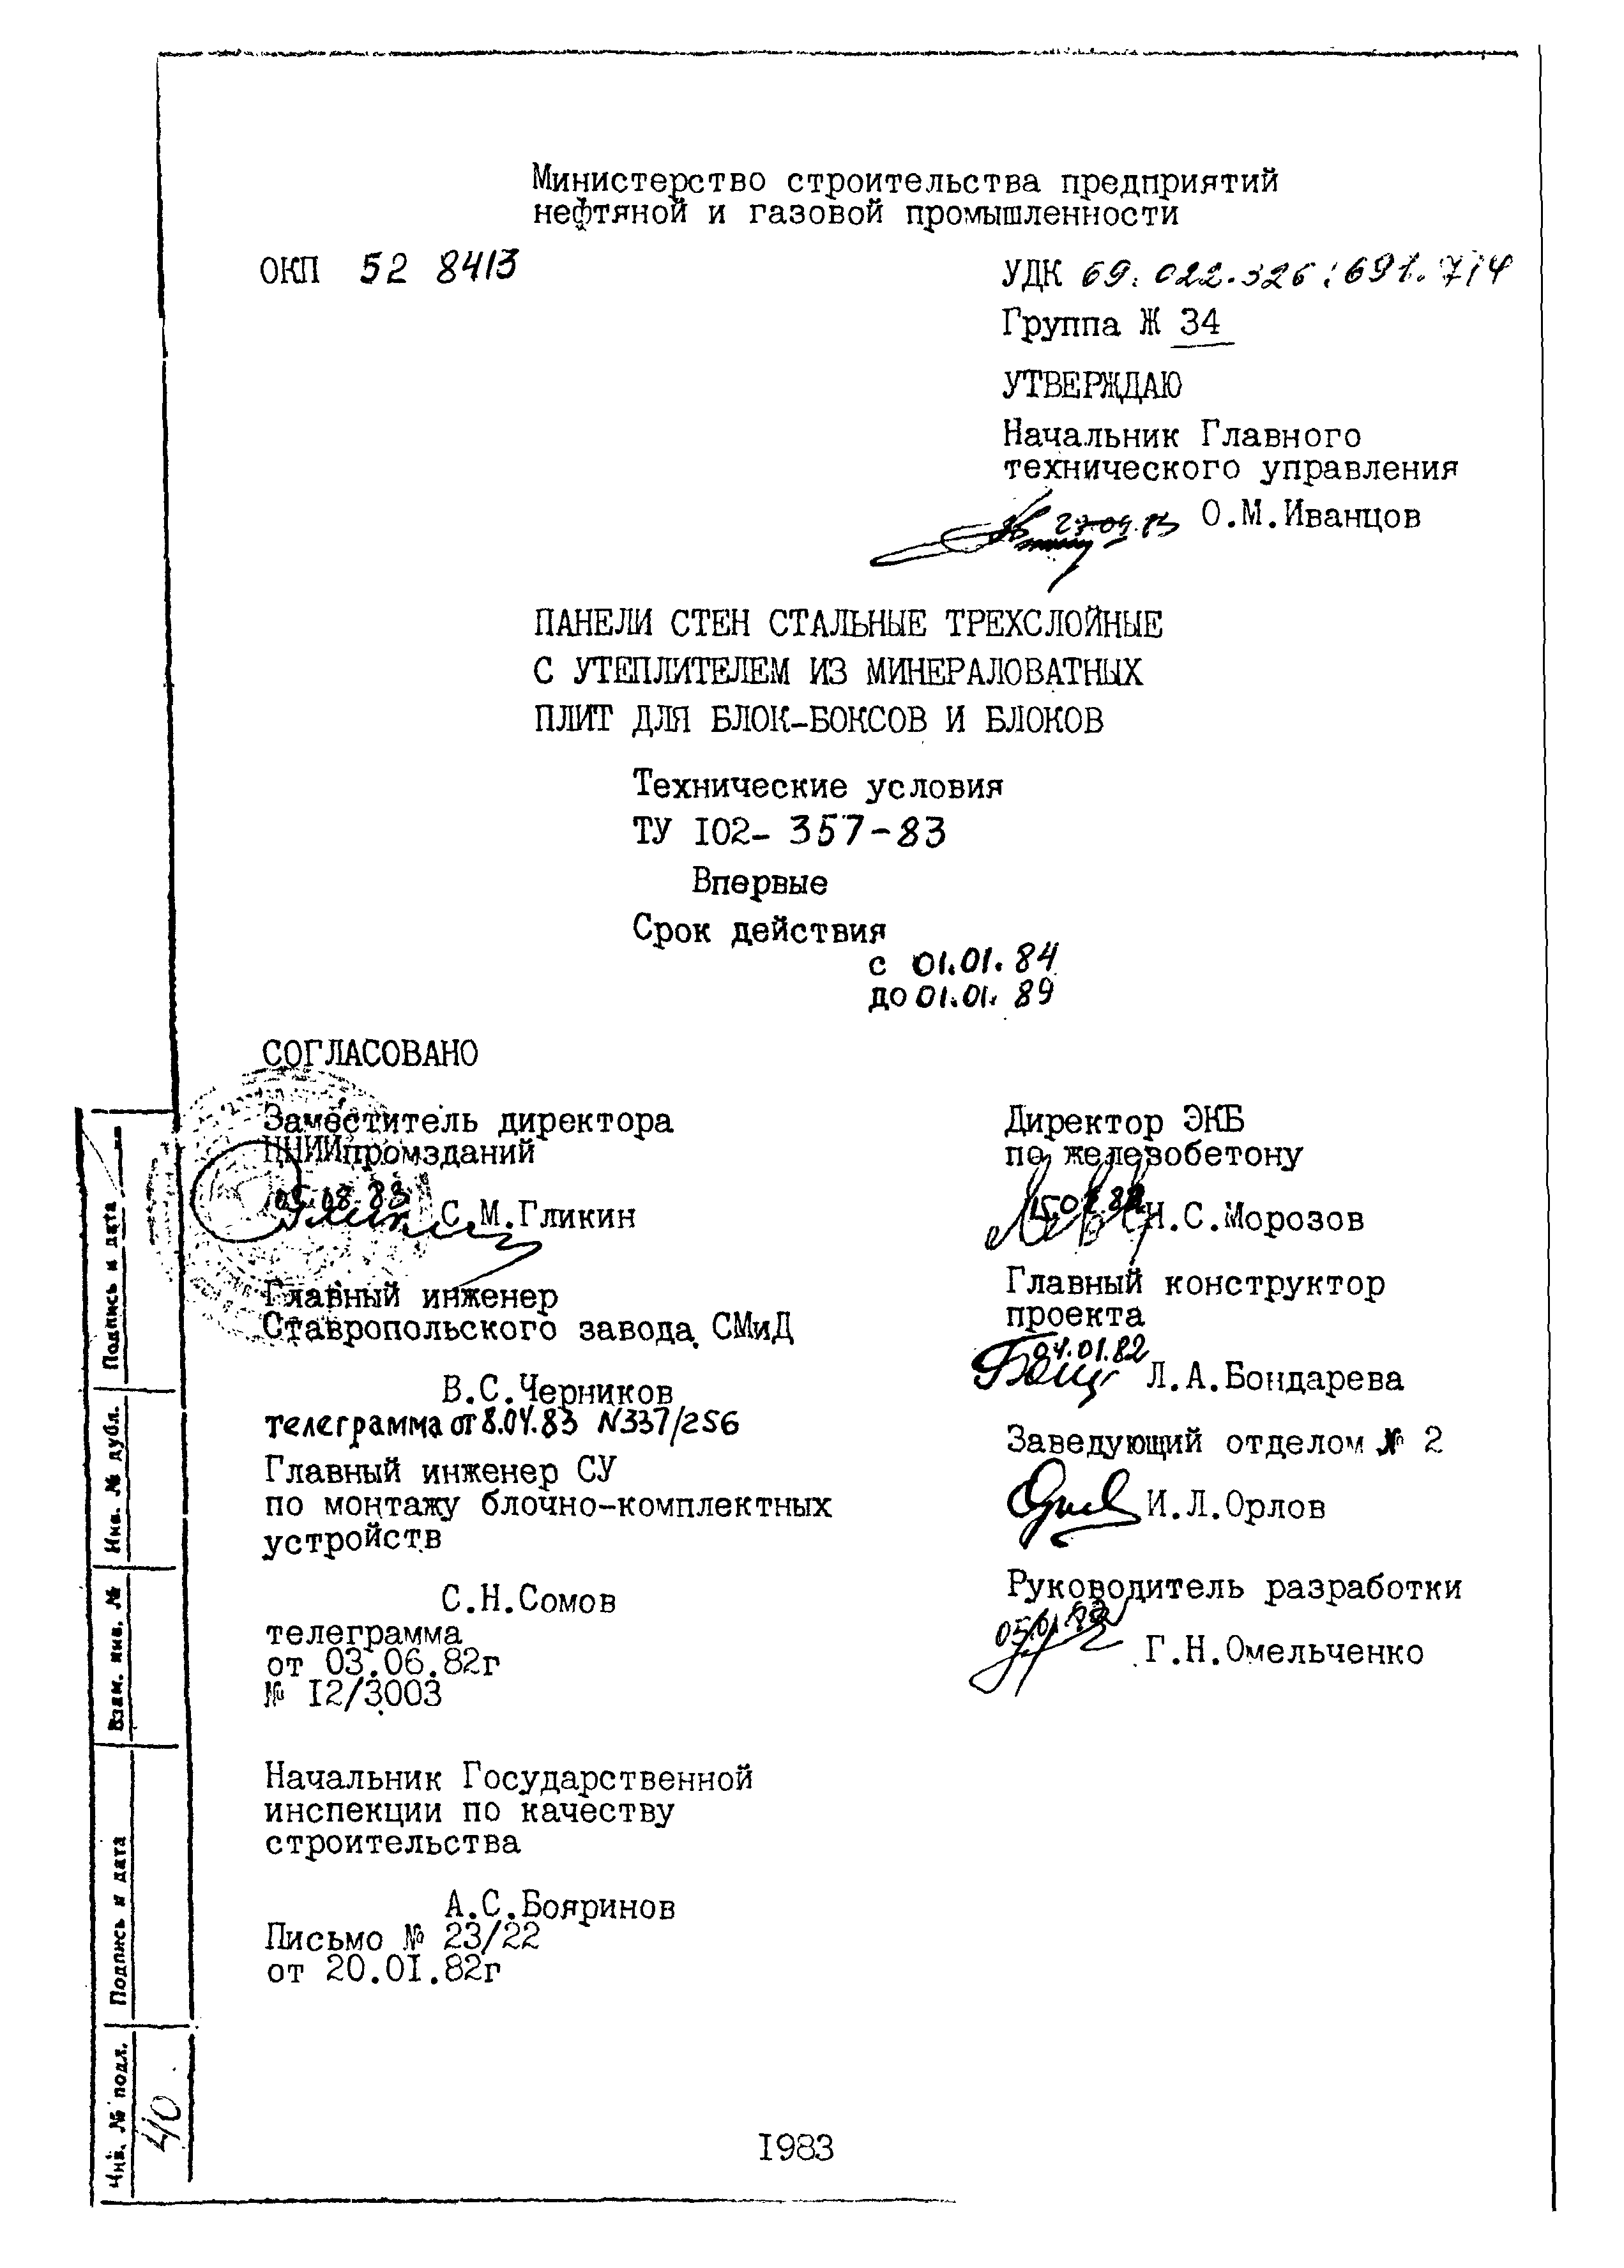 ТУ 102-357-83